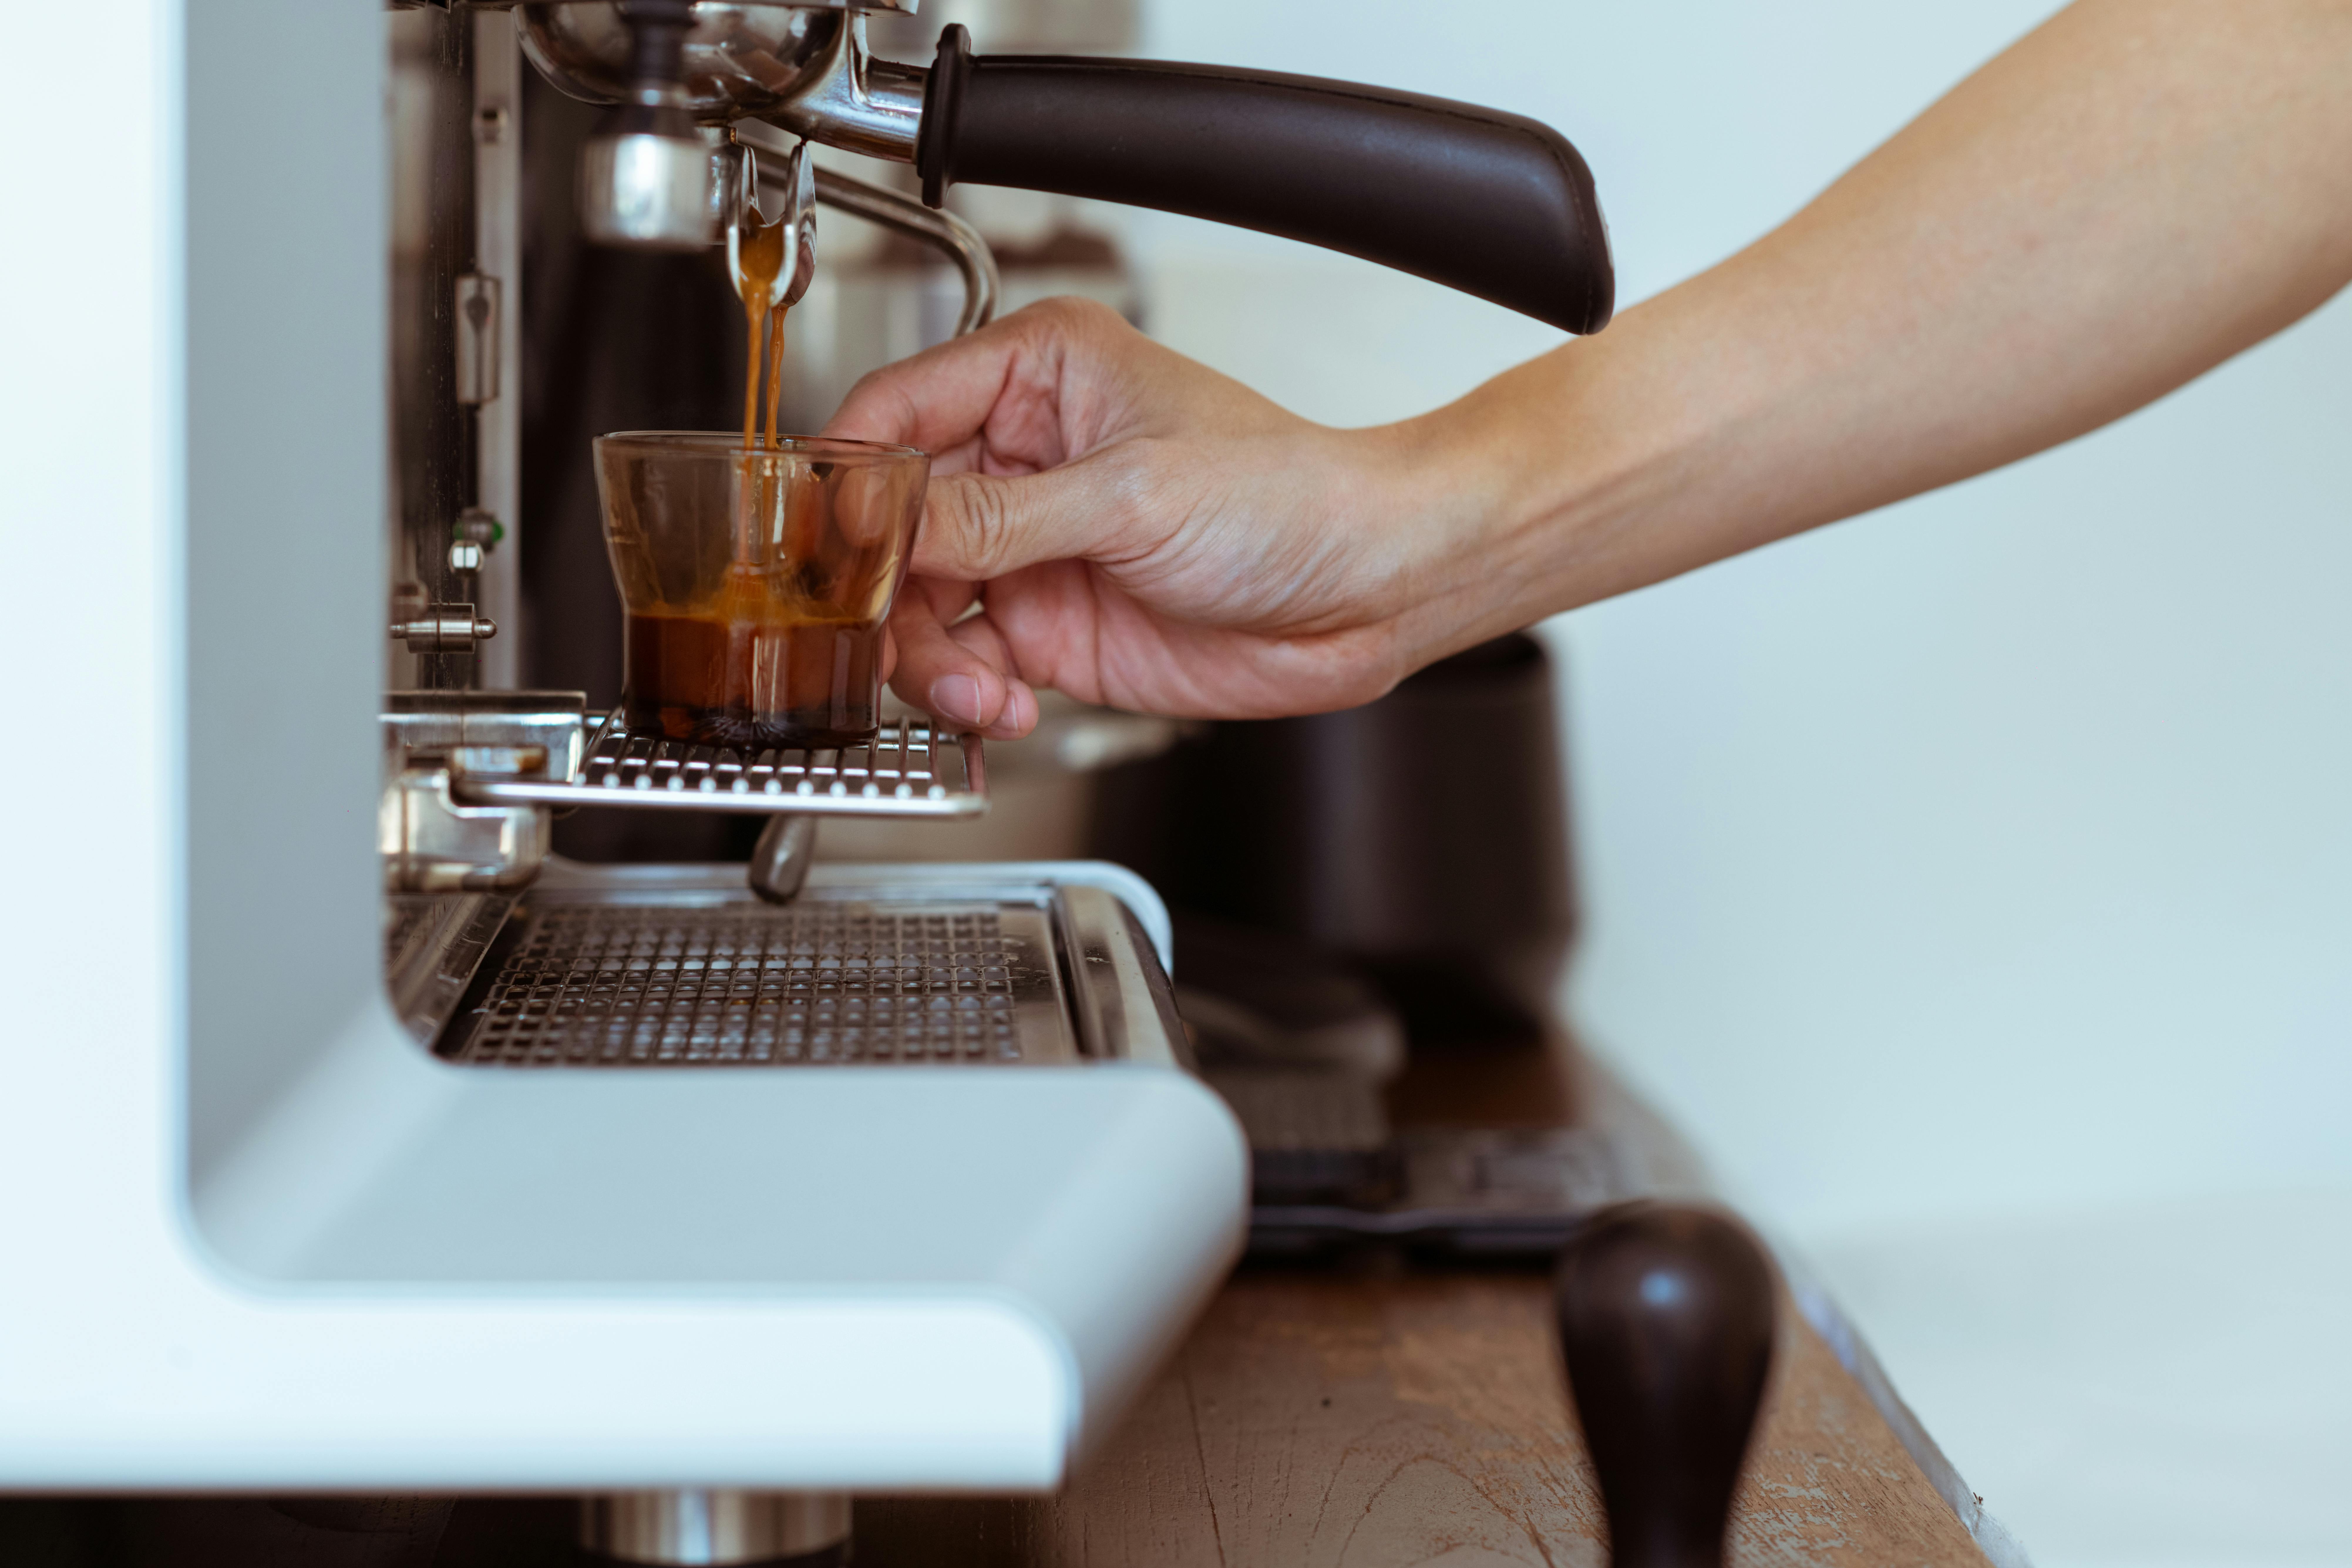 crop barista making coffee in coffeemaker